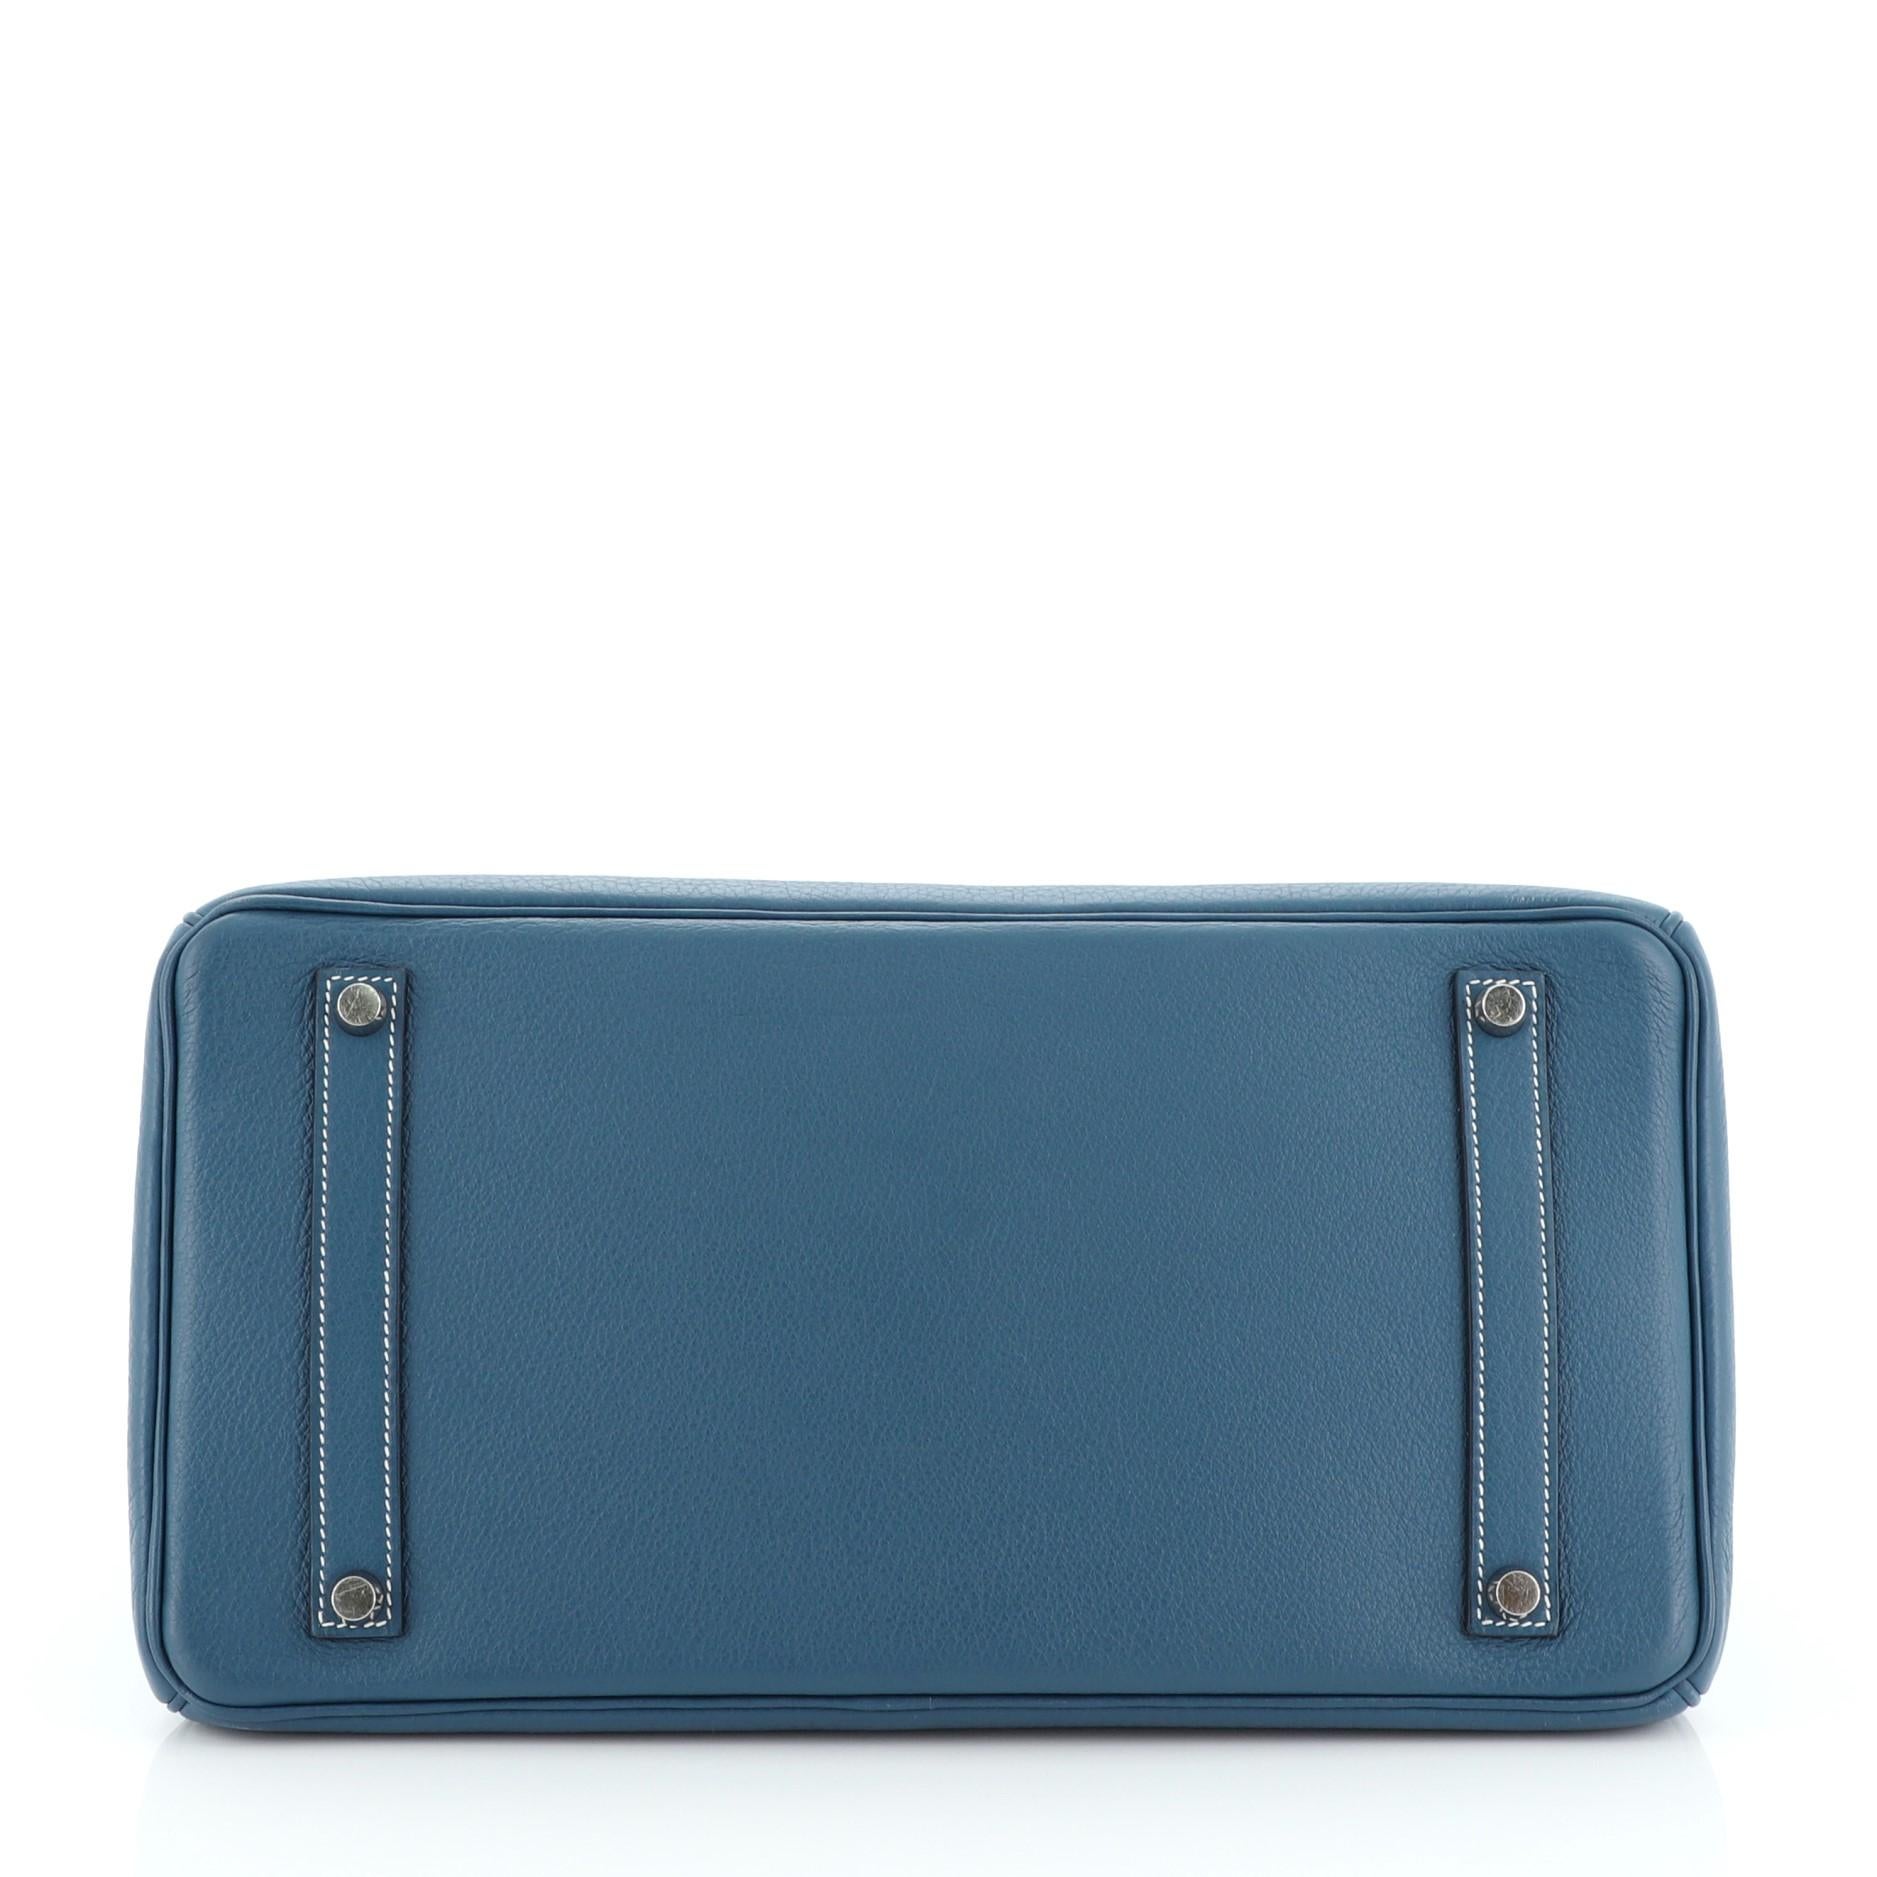 Blue Hermes Birkin Handbag Bleu Thalassa Clemence with Palladium Hardware 35